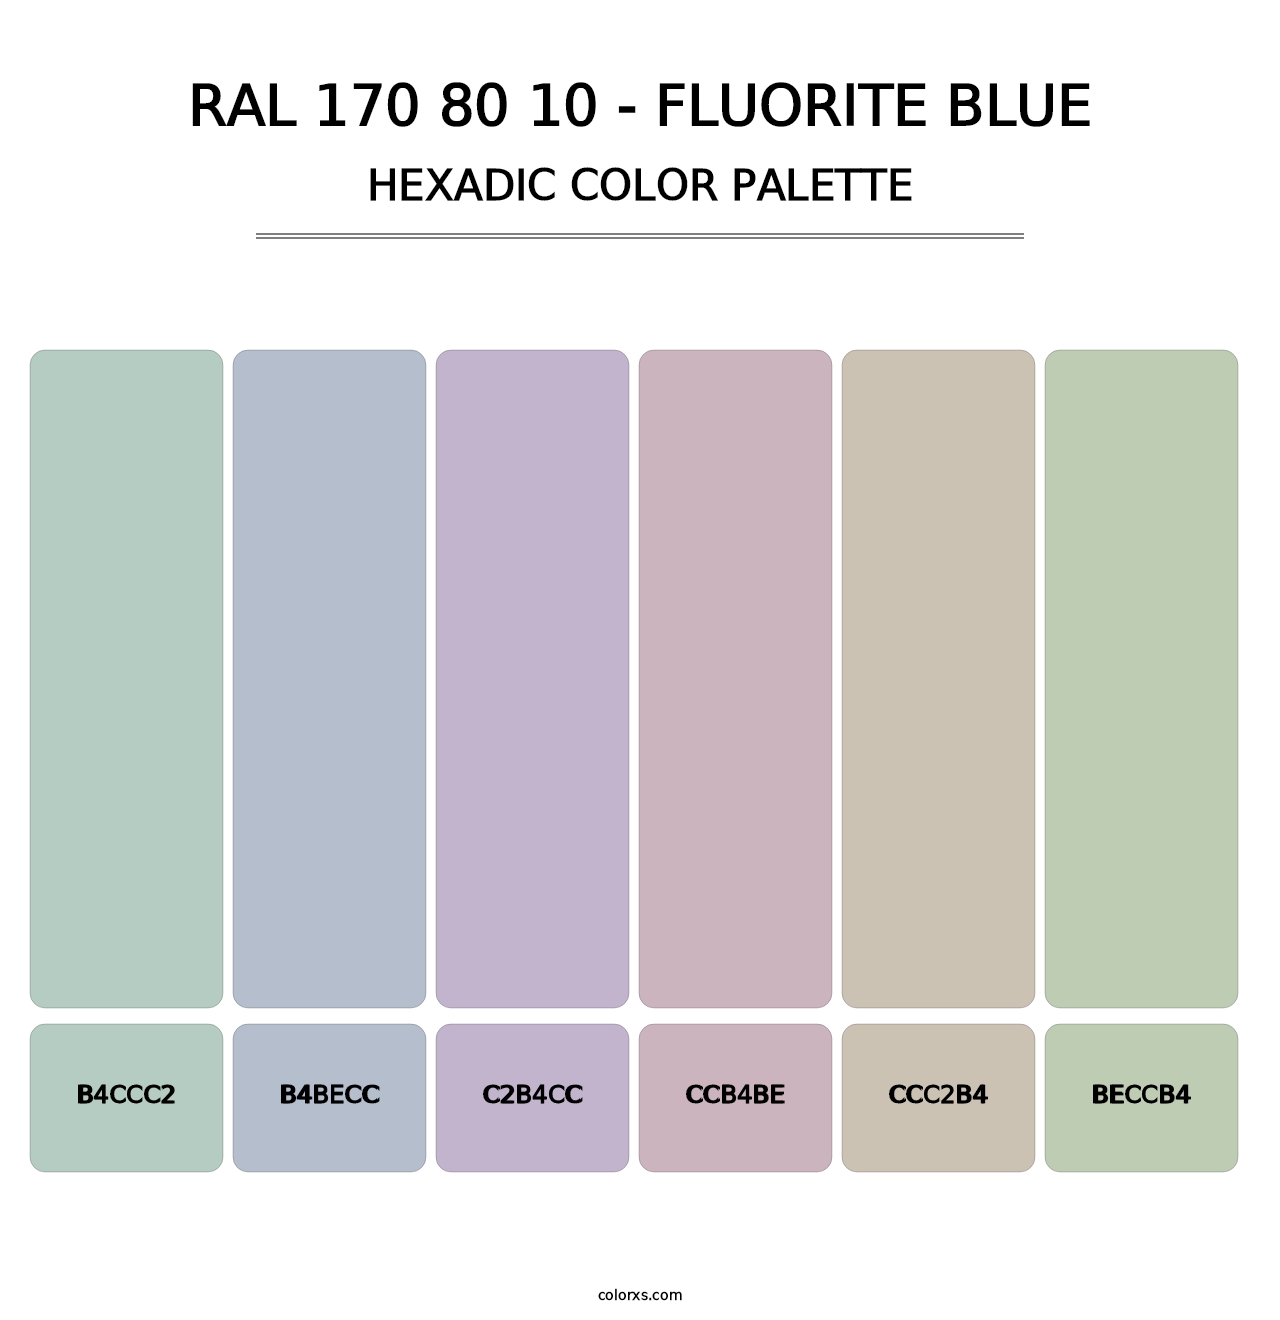 RAL 170 80 10 - Fluorite Blue - Hexadic Color Palette